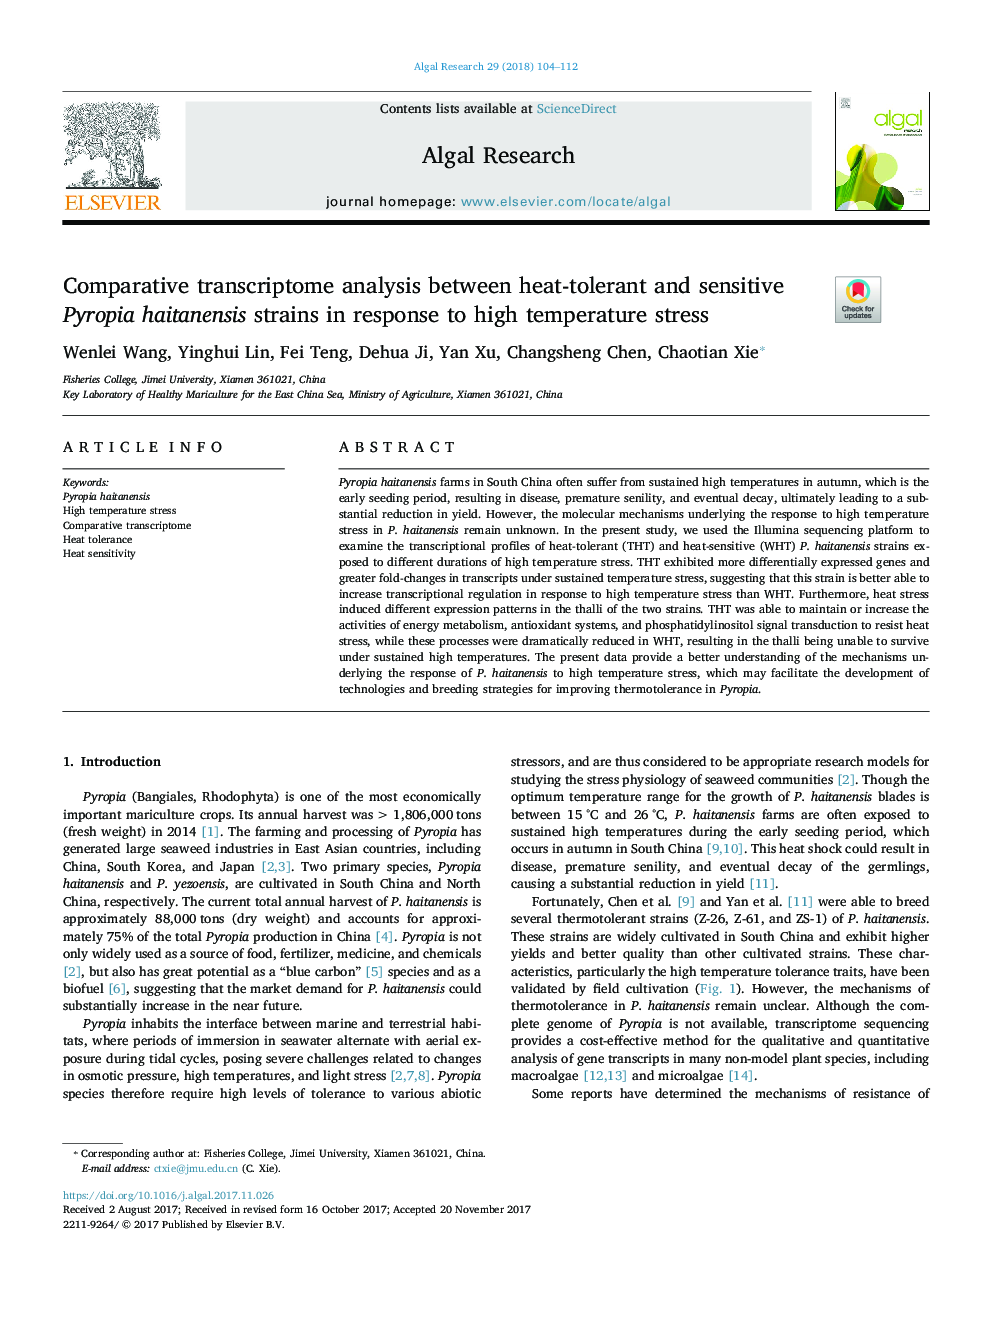 Comparative transcriptome analysis between heat-tolerant and sensitive Pyropia haitanensis strains in response to high temperature stress